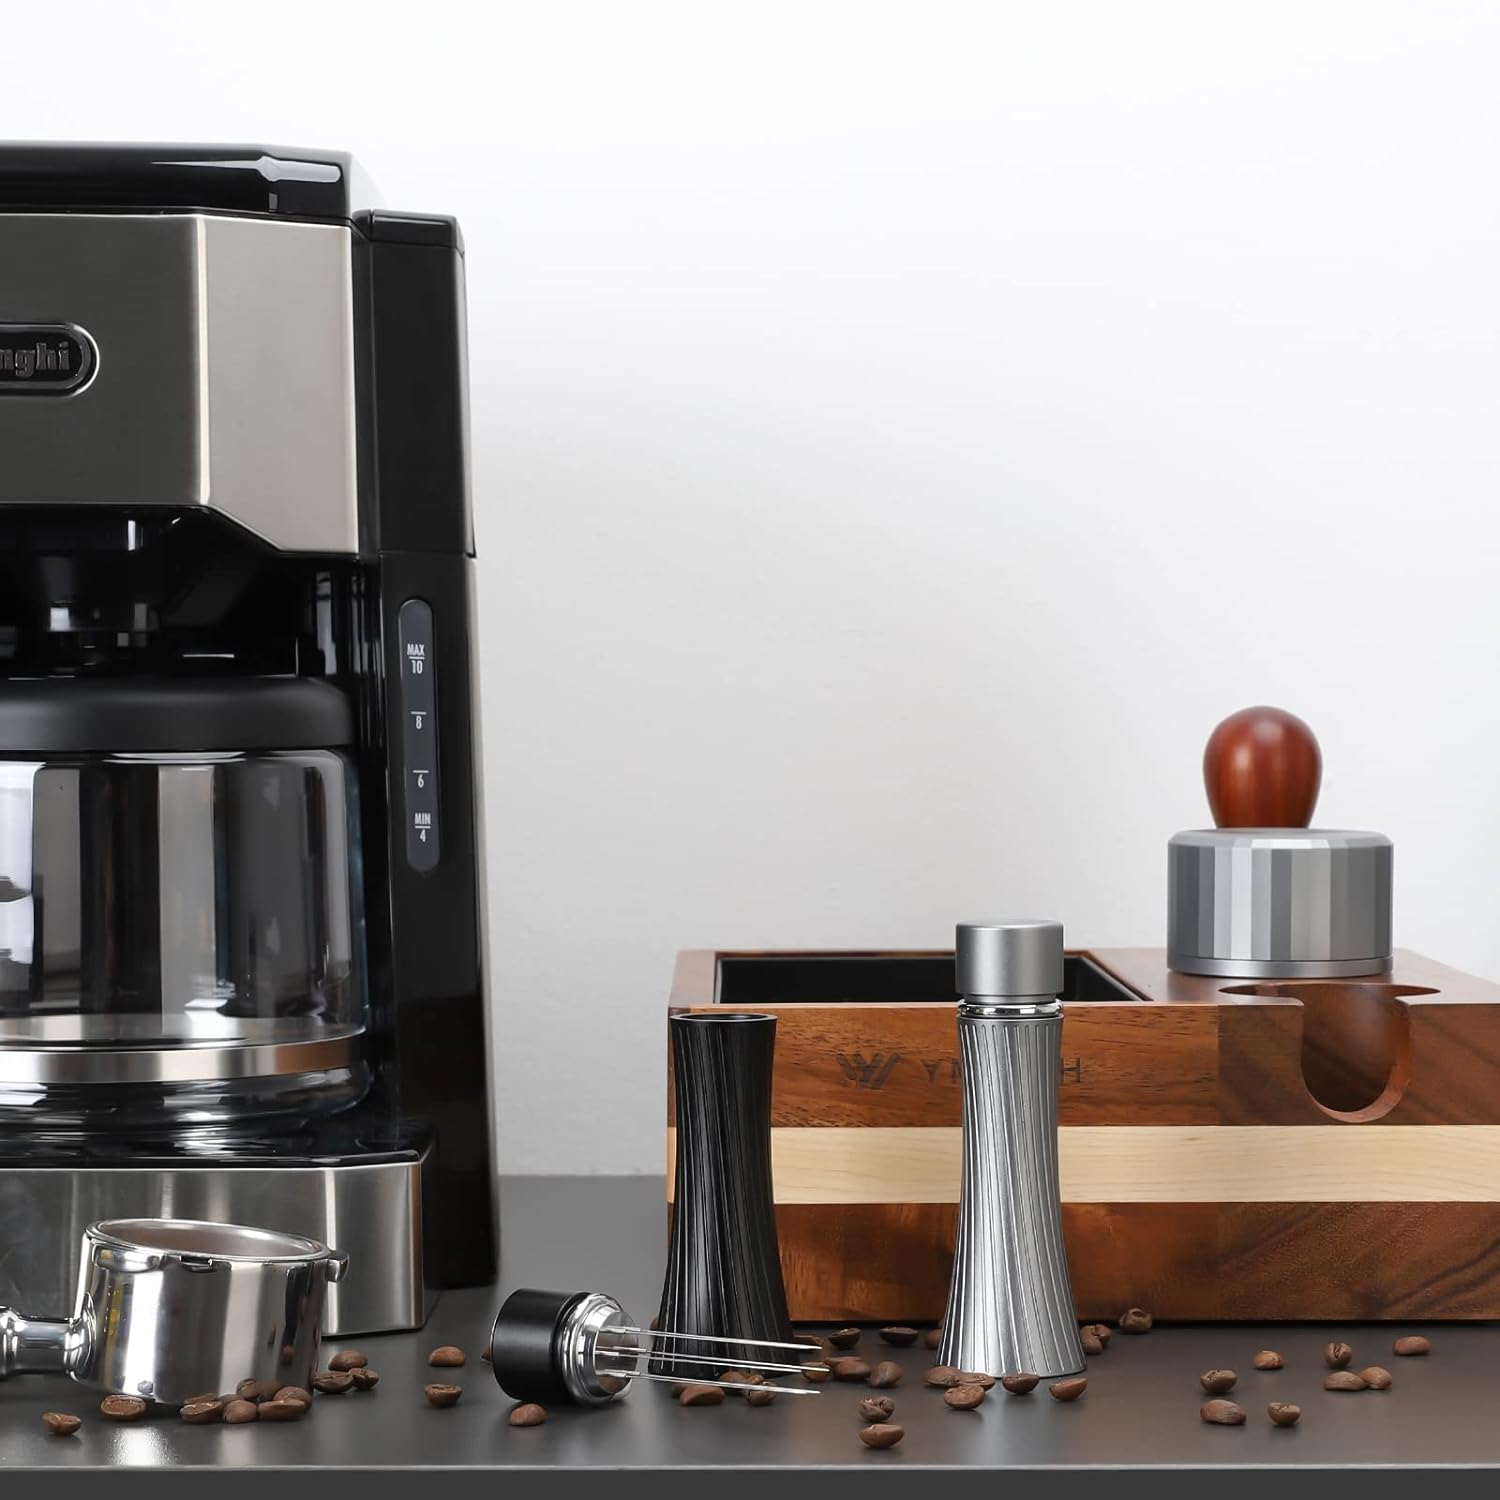 WDT Tools Espresso,Professional Espresso Coffee Stirrer, Espresso Distribution Tool for Barista, 0.25MM Espresso WDT Tool with Stand and Extra 6 Needles (Silver-Gray)